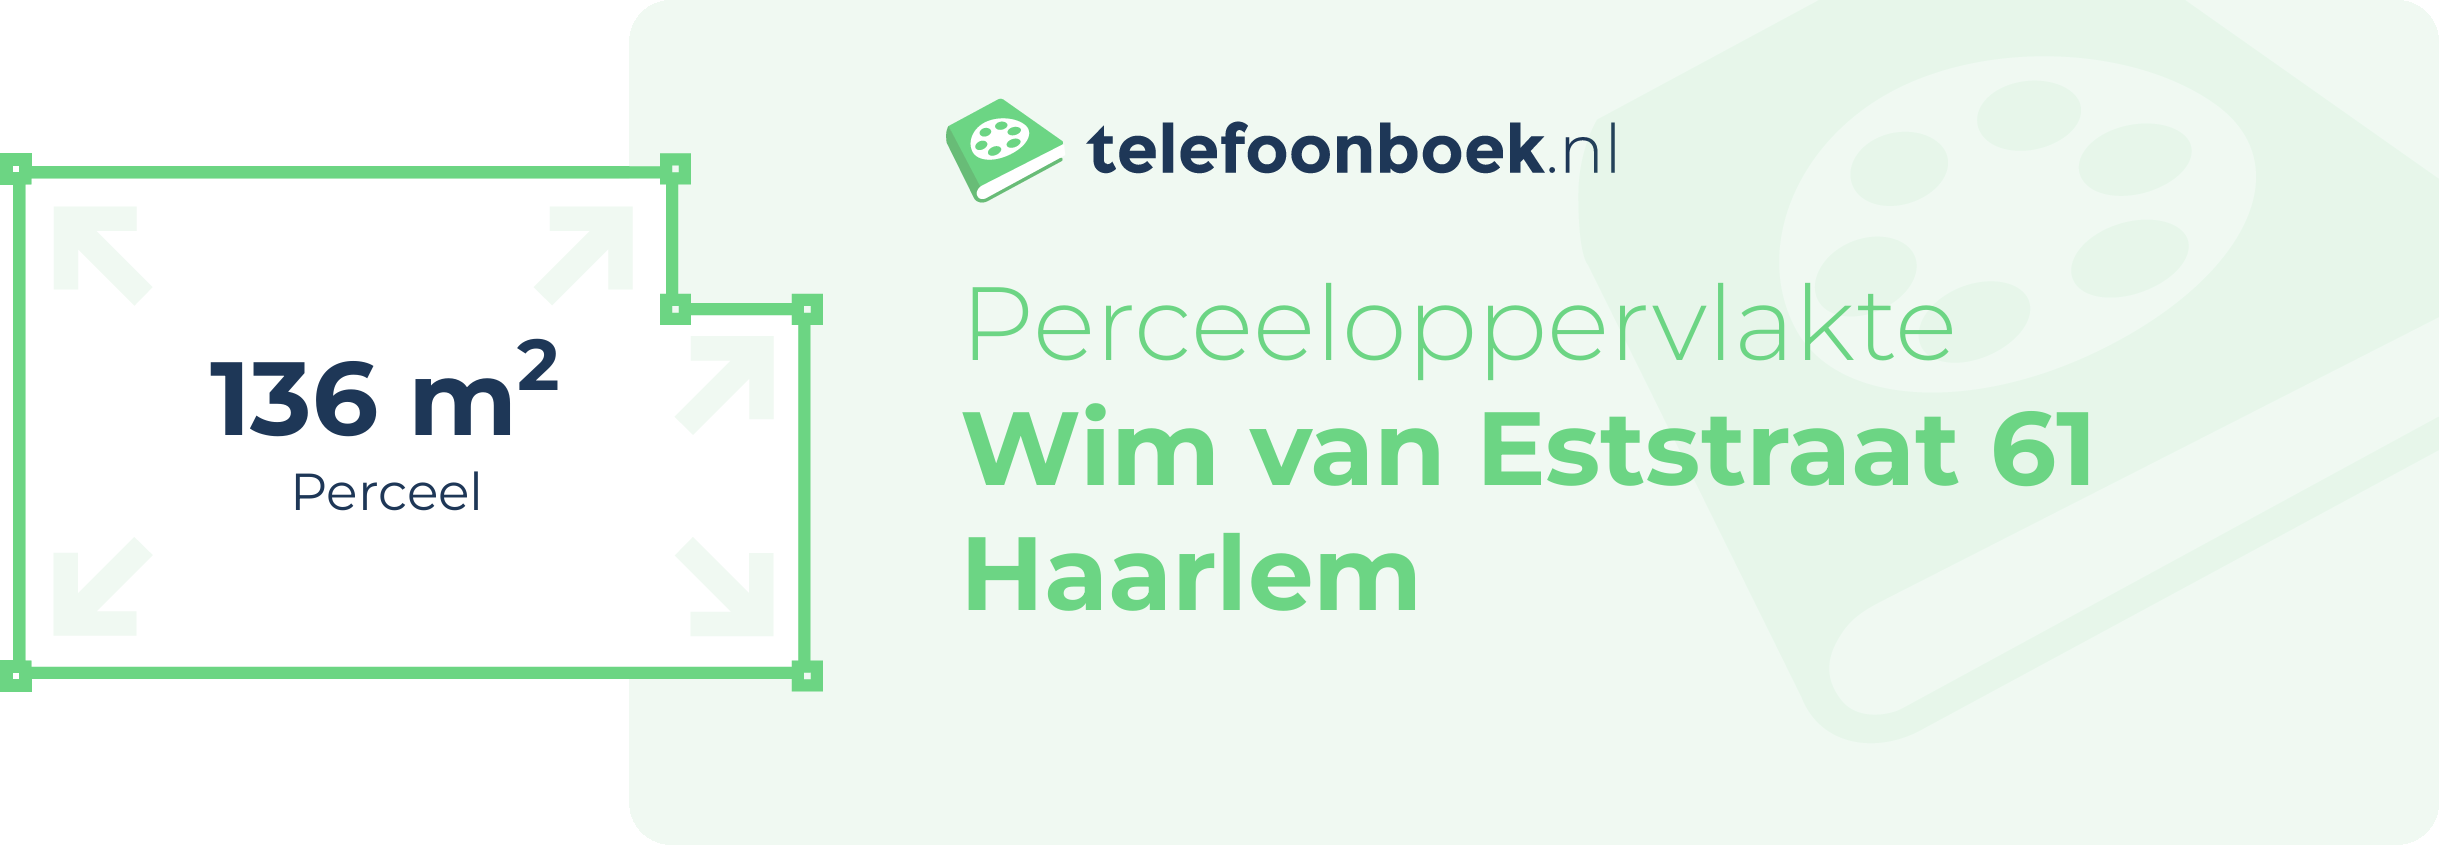 Perceeloppervlakte Wim Van Eststraat 61 Haarlem